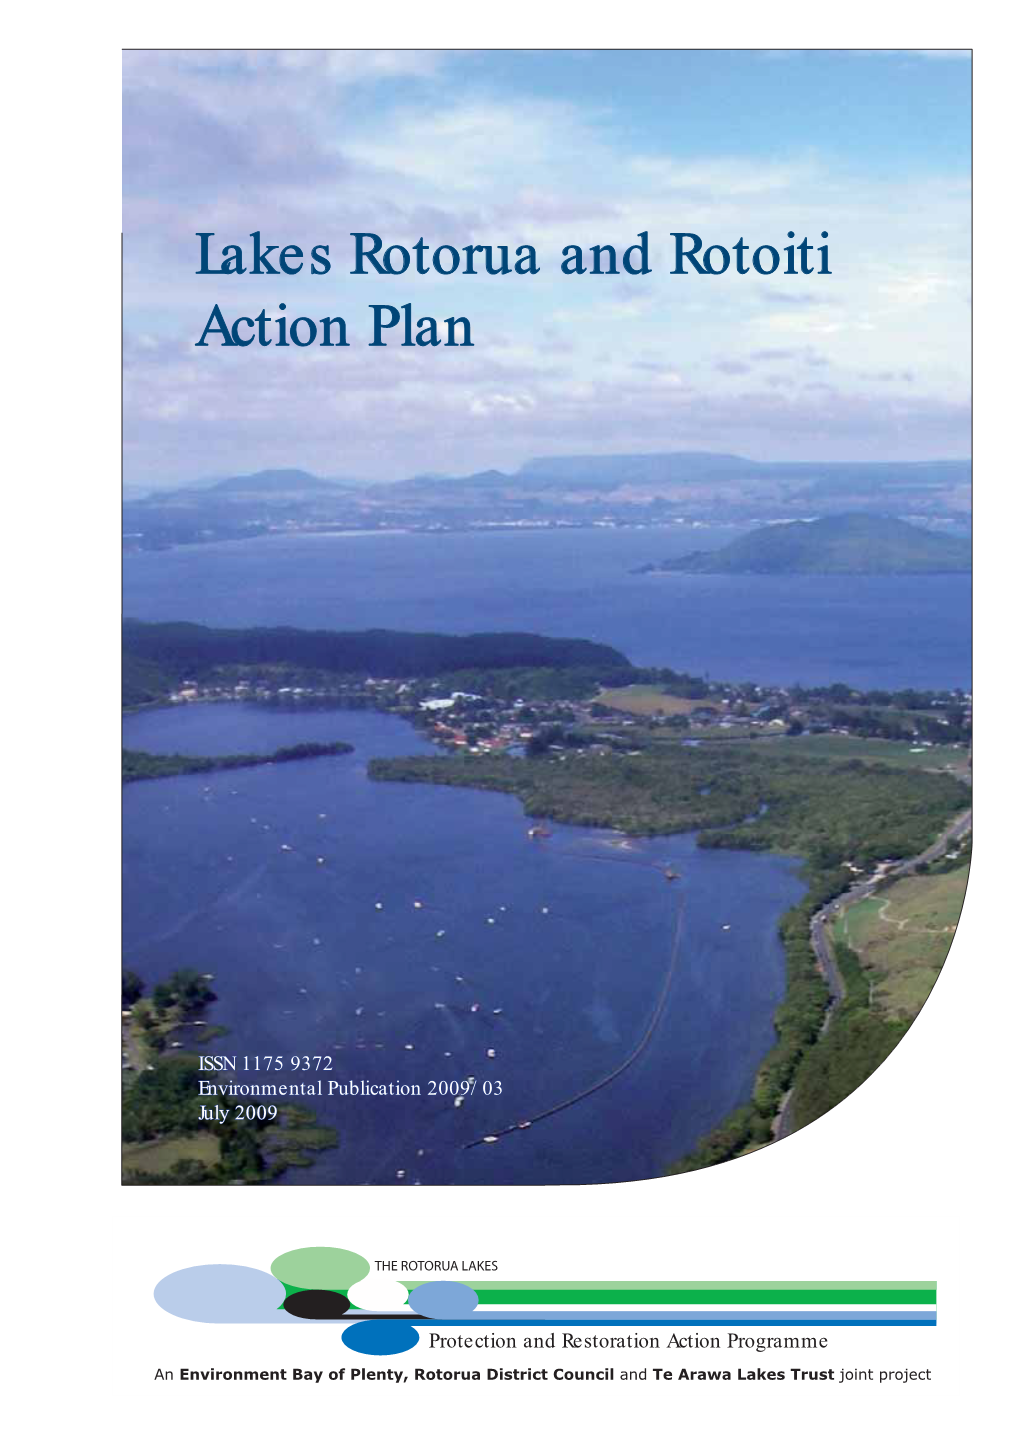 Lakes Rotorua and Rotoiti Action Plan Environmental Publication 2009/03 Ii Environment Bay of Plenty, Rotorua District Council, Te Arawa Lakes Trust